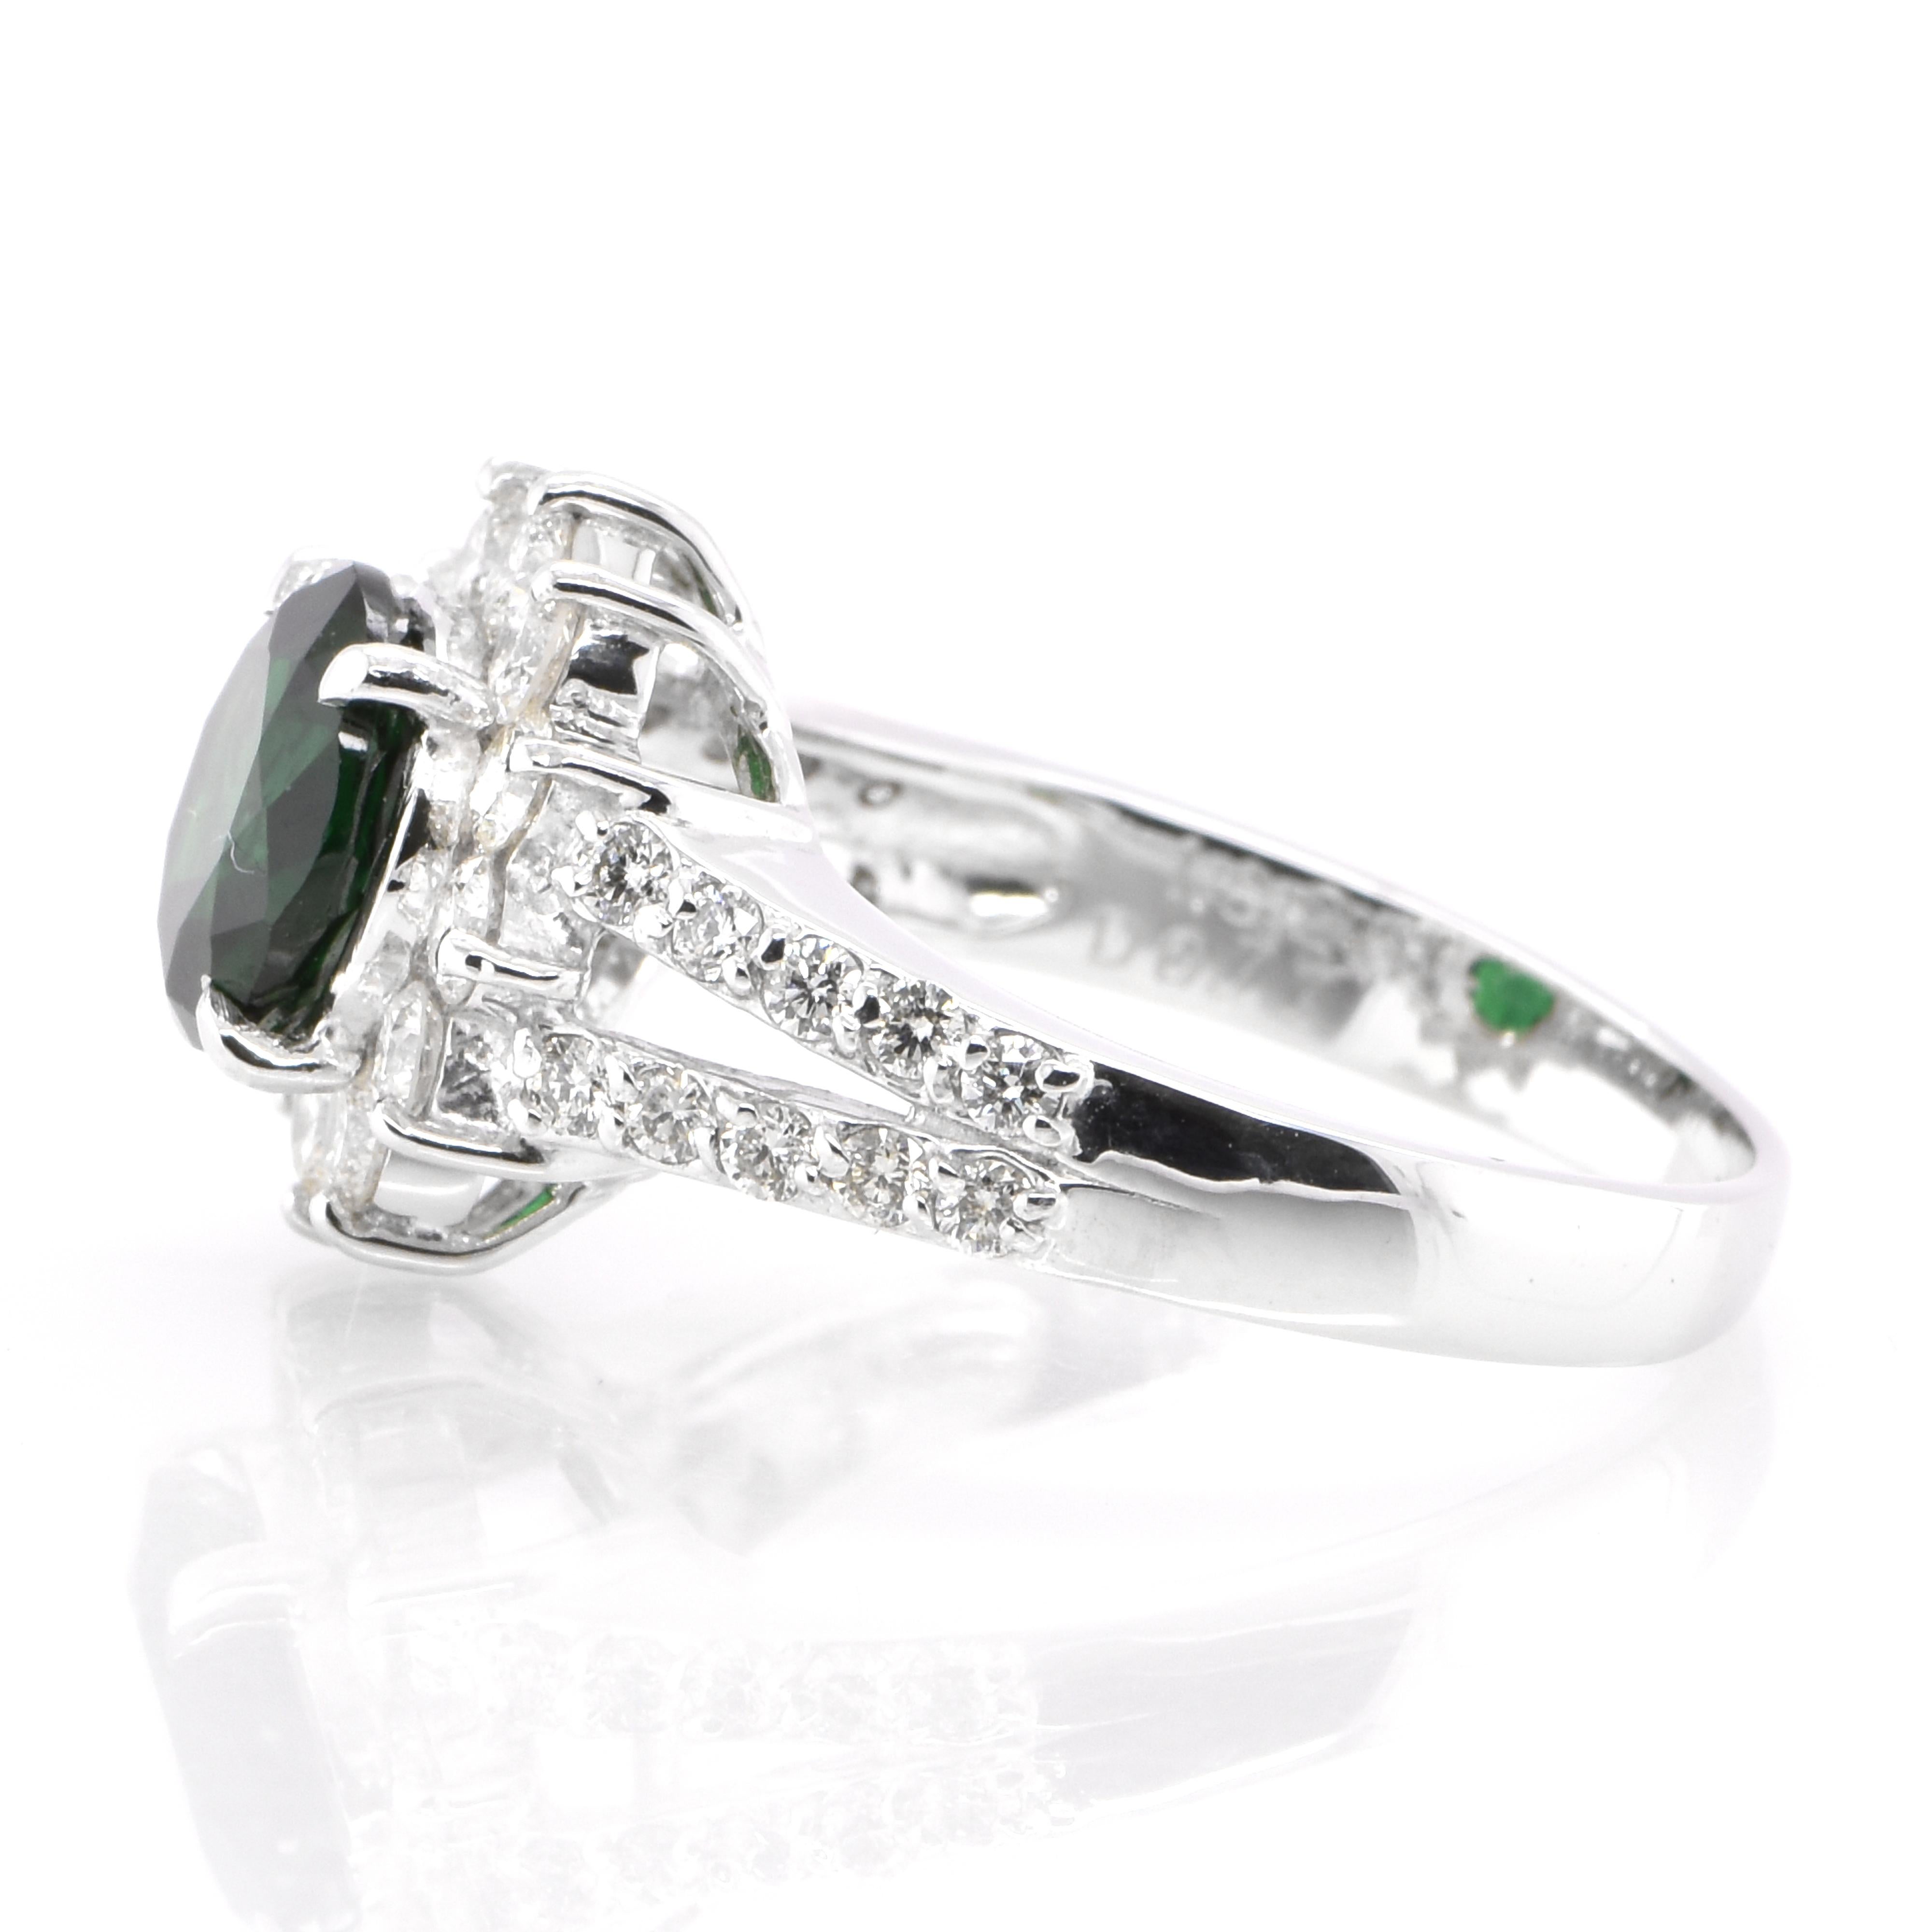 Round Cut 1.82 Carat Natural Tsavorite Garnet and Diamond Halo Ring Set in Platinum For Sale